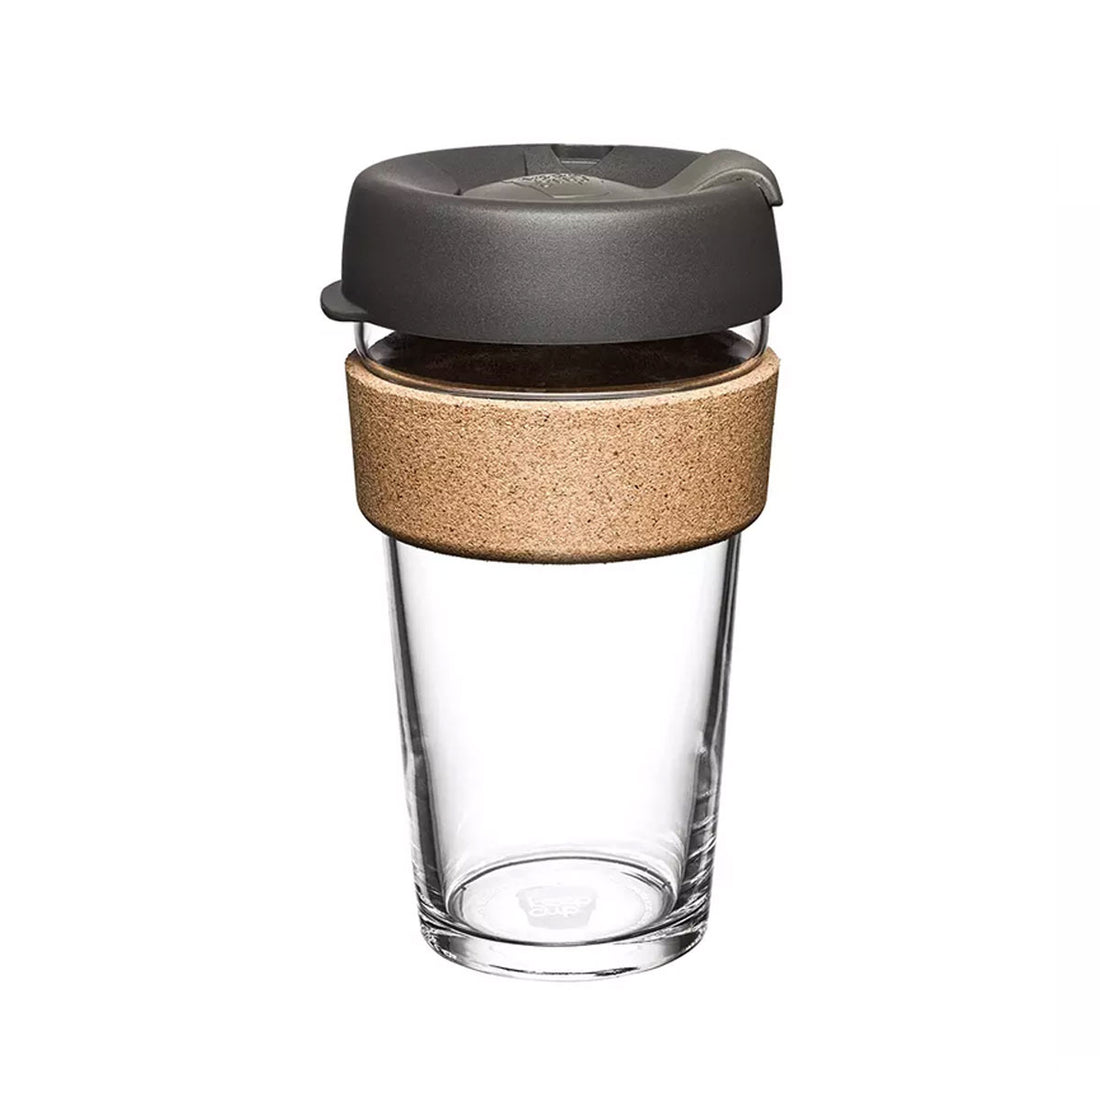 KeepCup Brew Cork Glass Reusable Coffee Cup L 16oz/454ml - Nitro